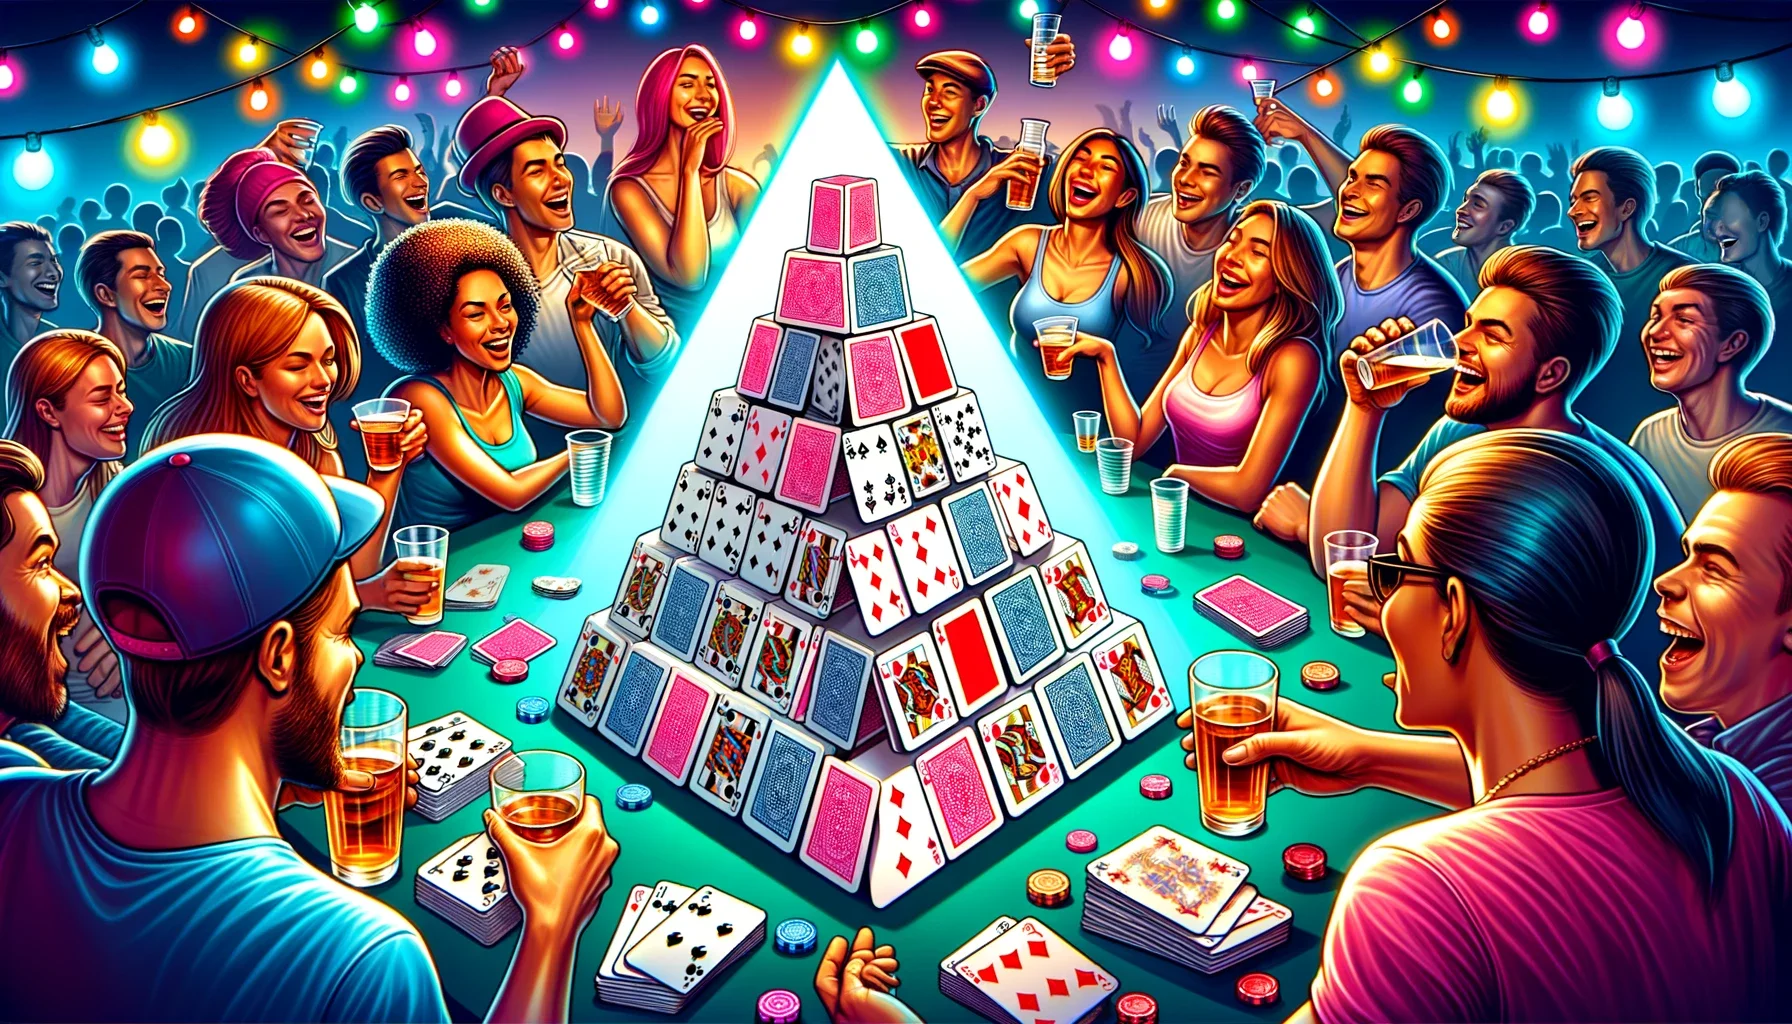 Pyramid drinking card game